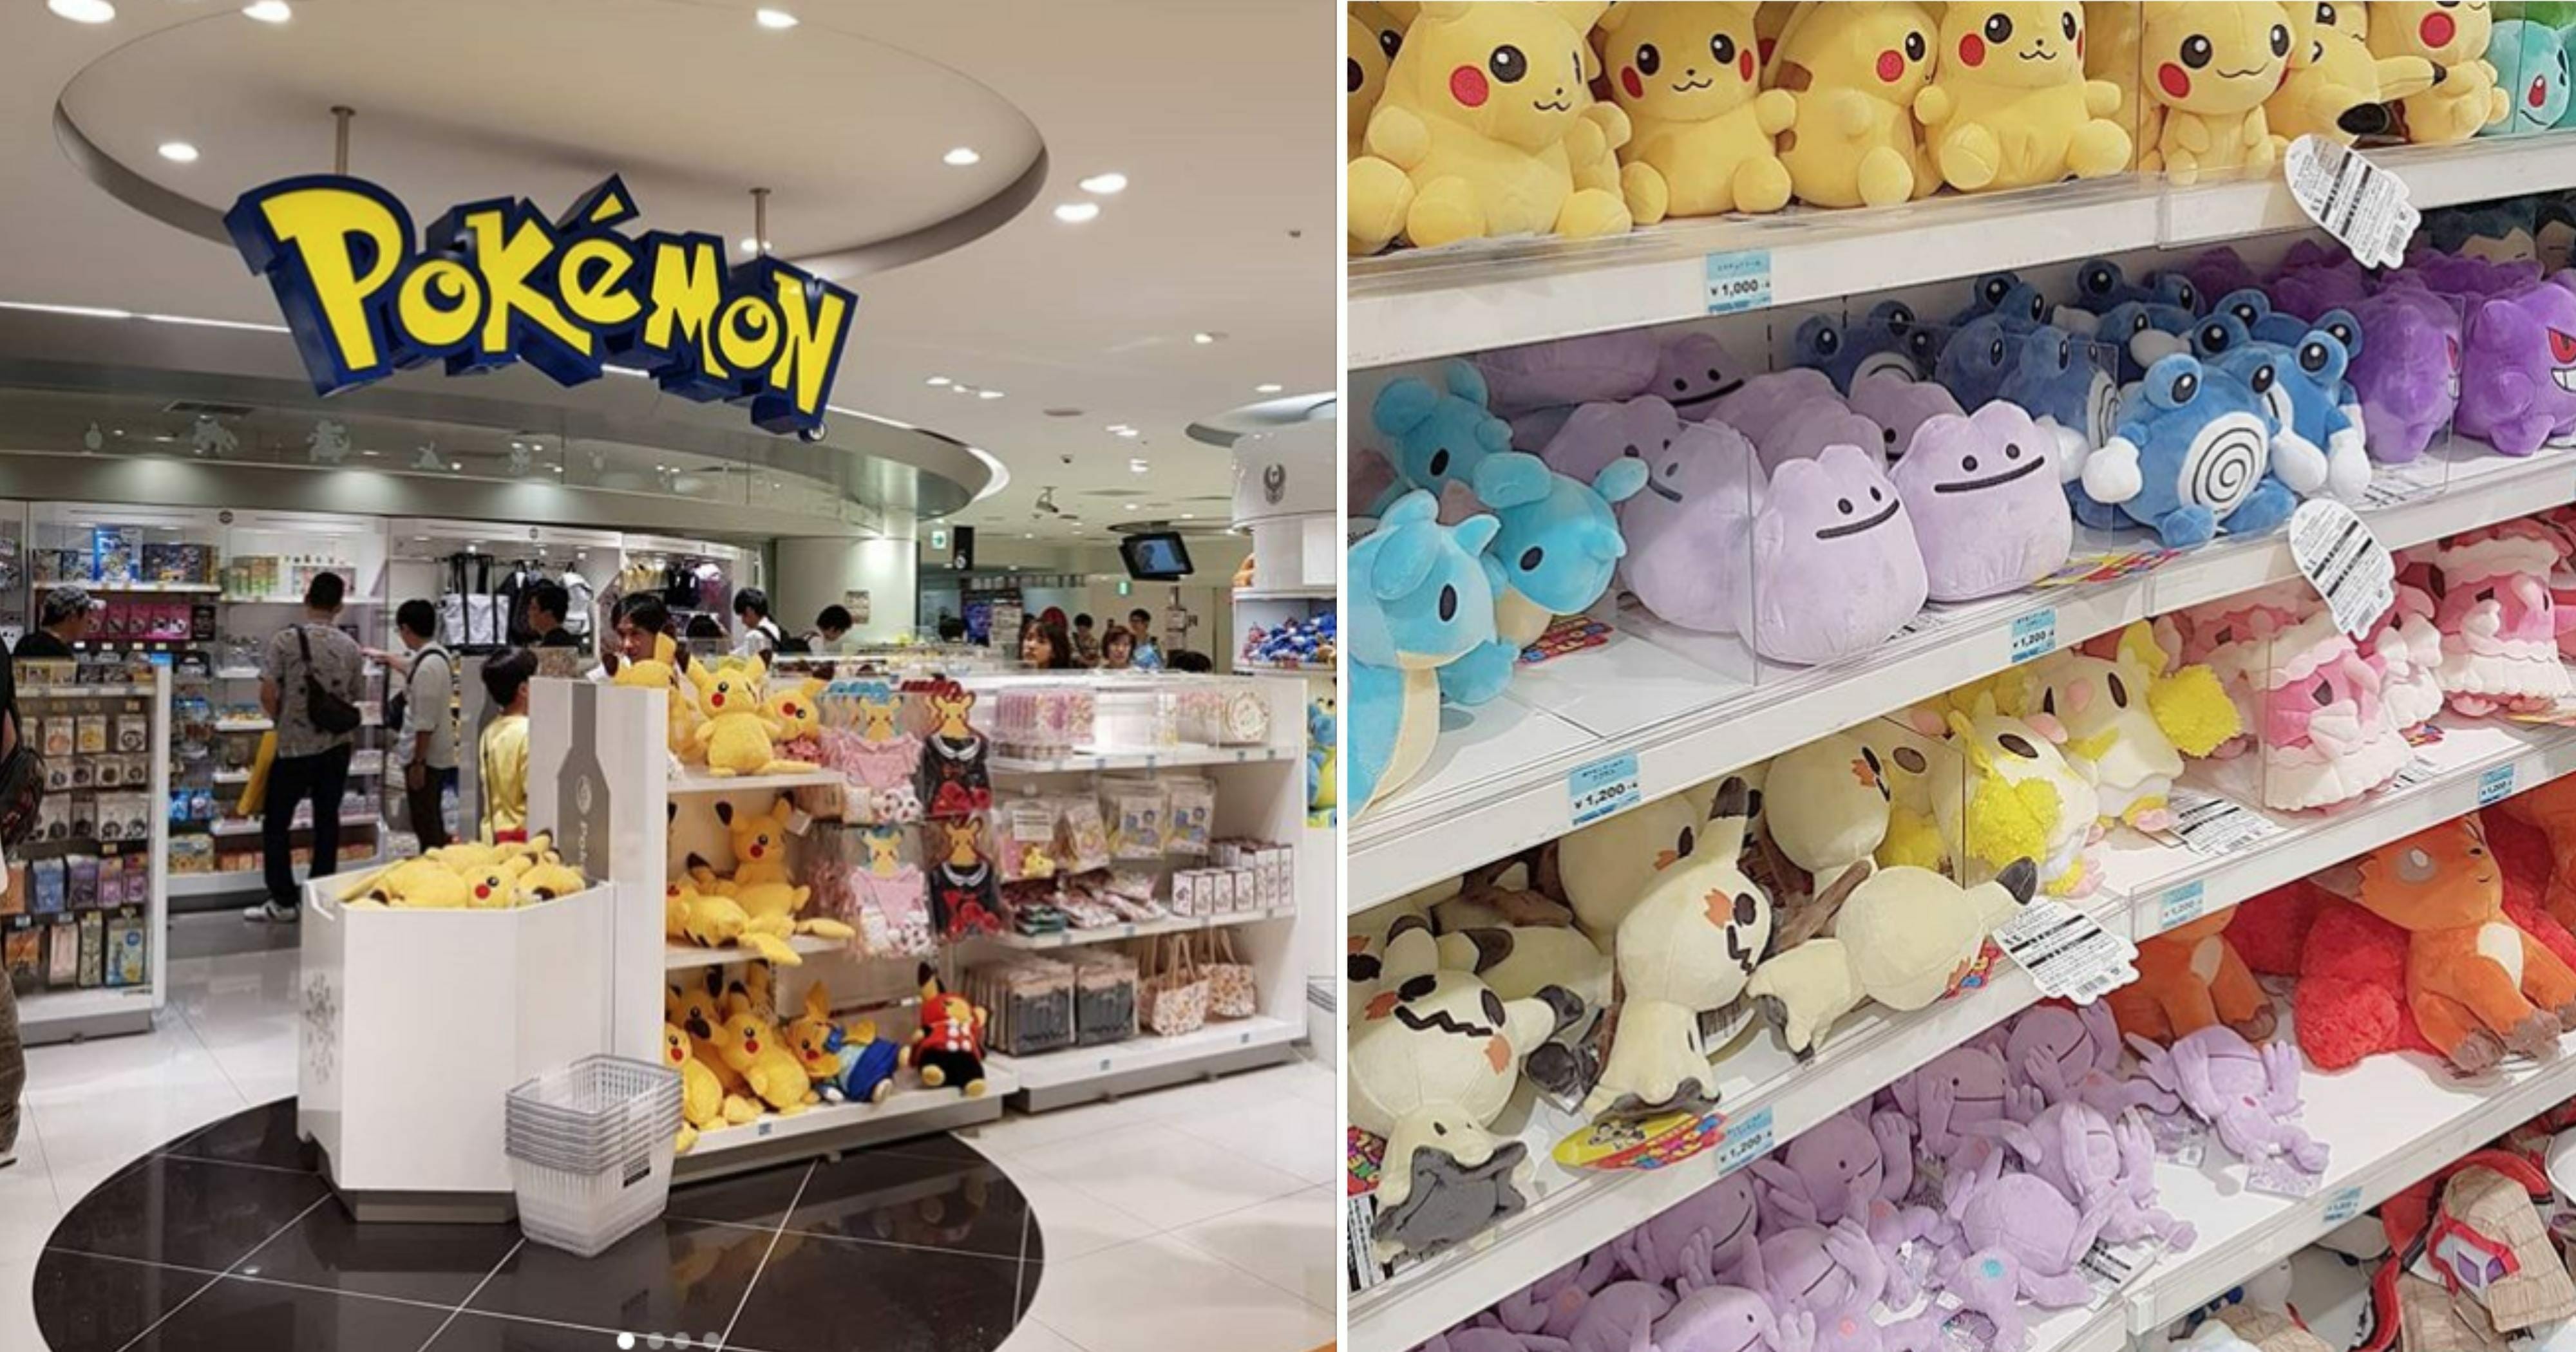 Pokémon Center London Officially Opening according to Pokémon Company